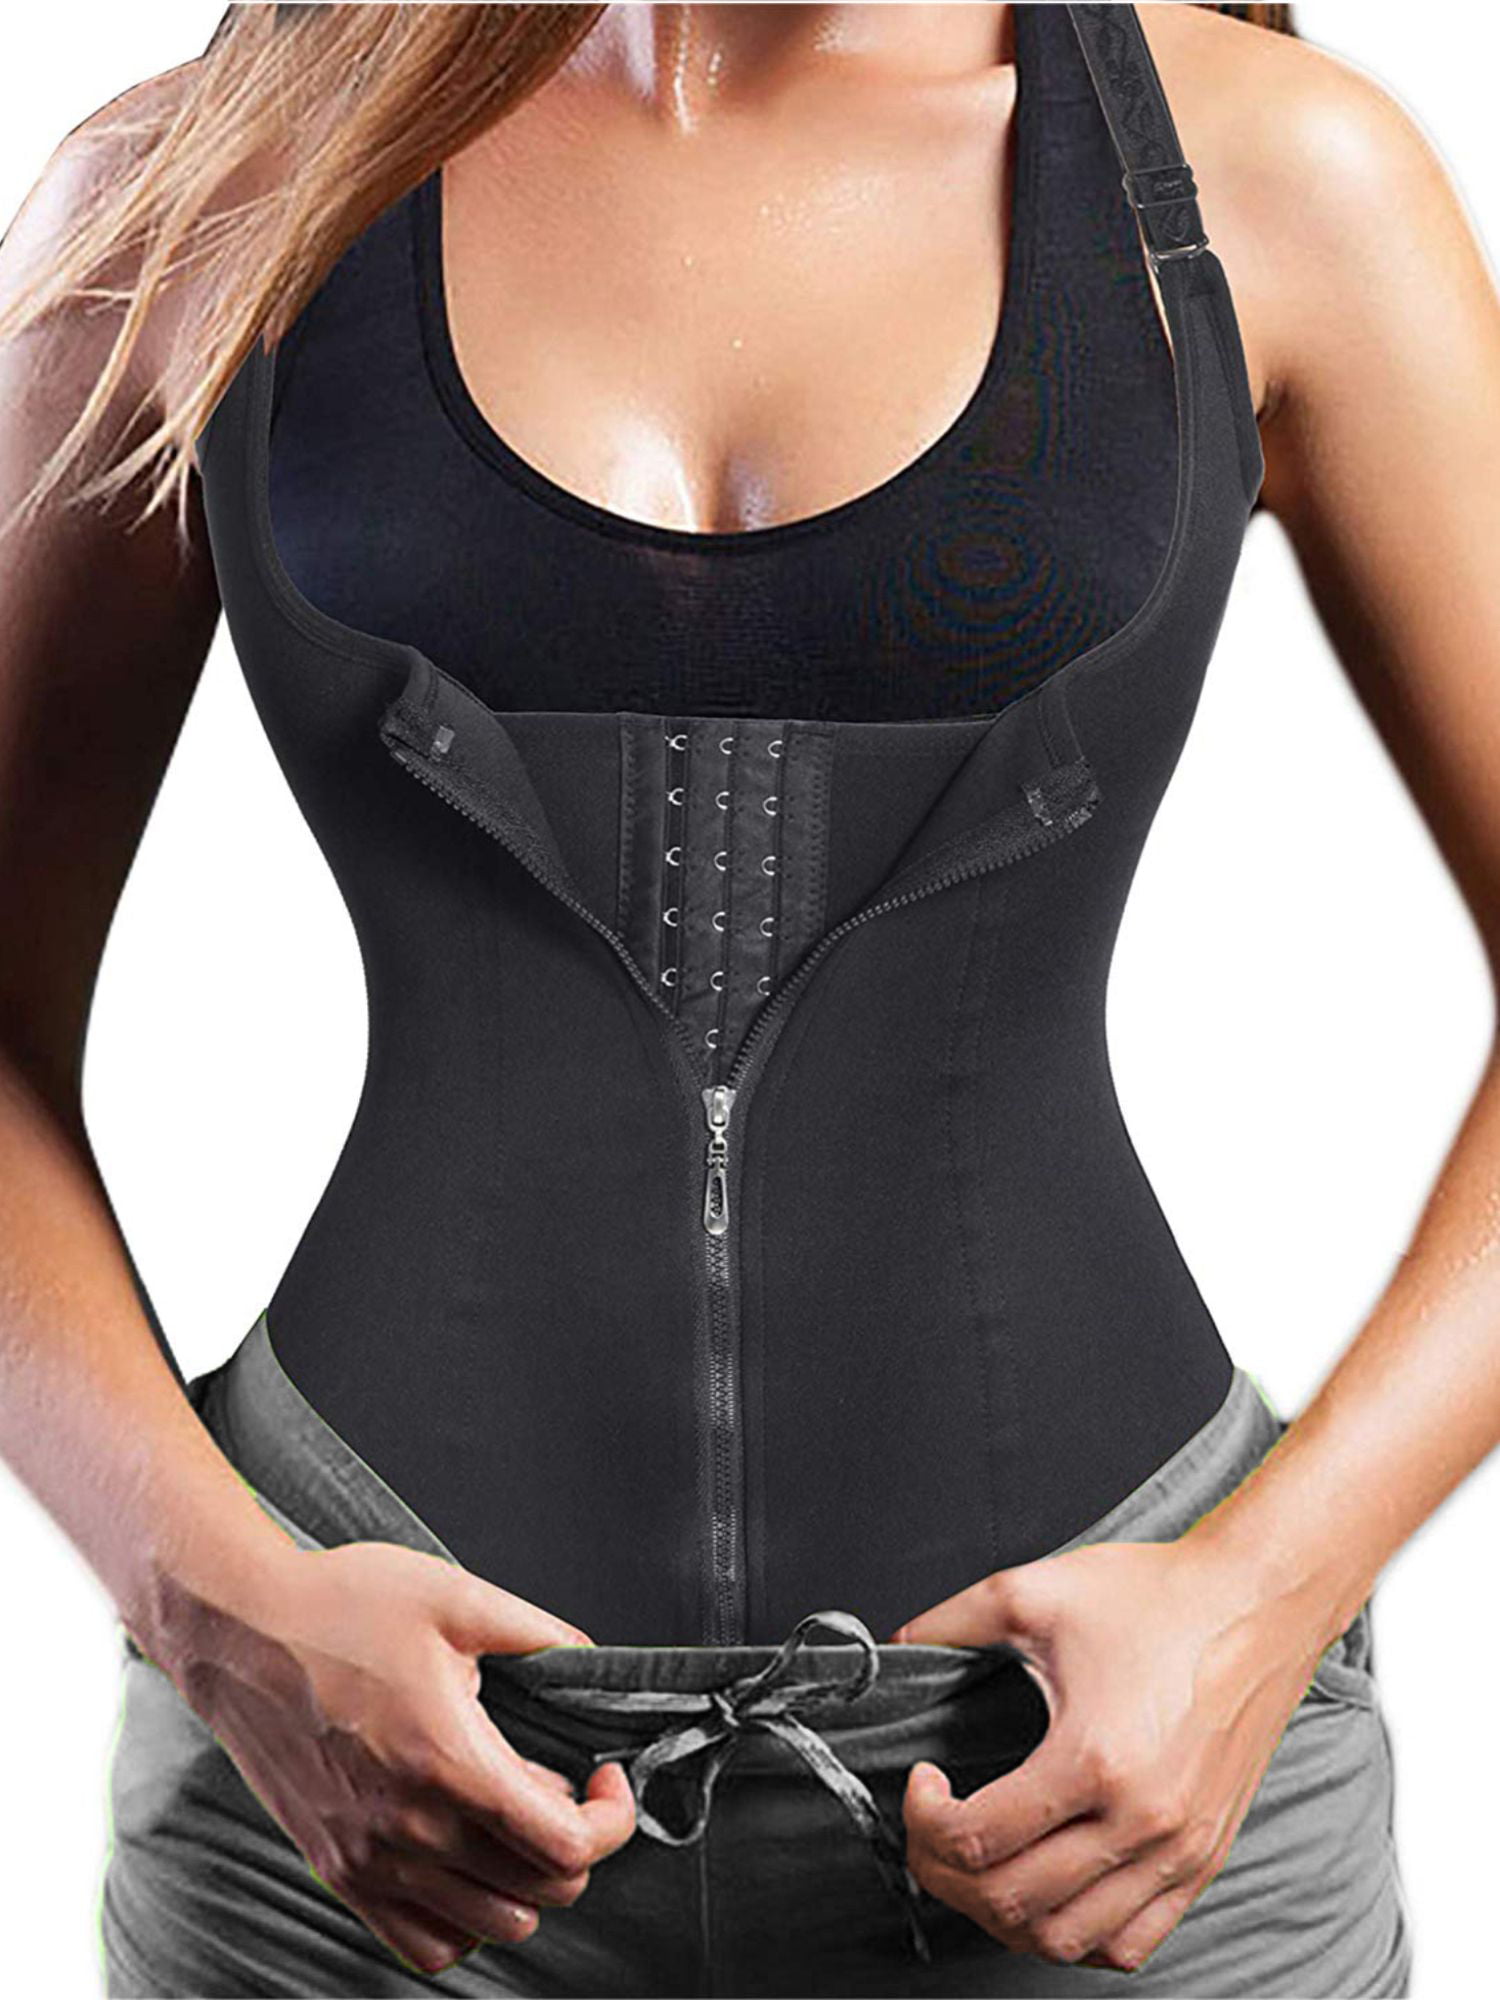 Women Body Shaper Slimming Waist Trainer Cincher Underbust Corset Belt Shapew/_TI